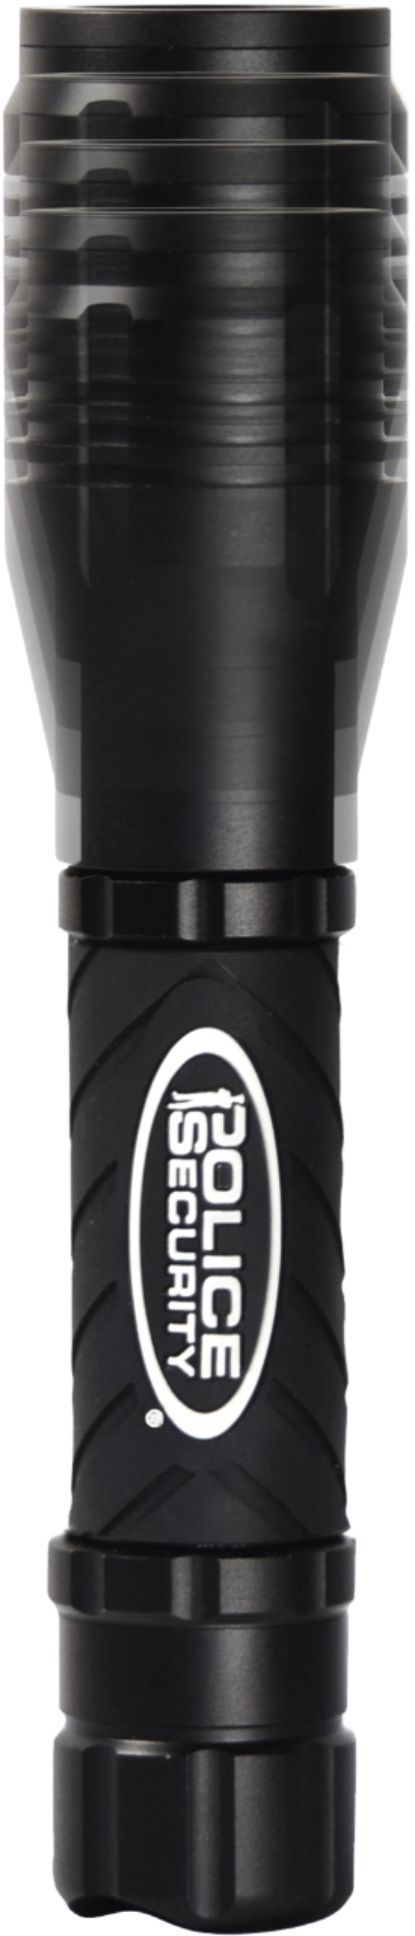 Police Security Elite 1400 Lumen LED Flashlight Black 98418 - Best Buy